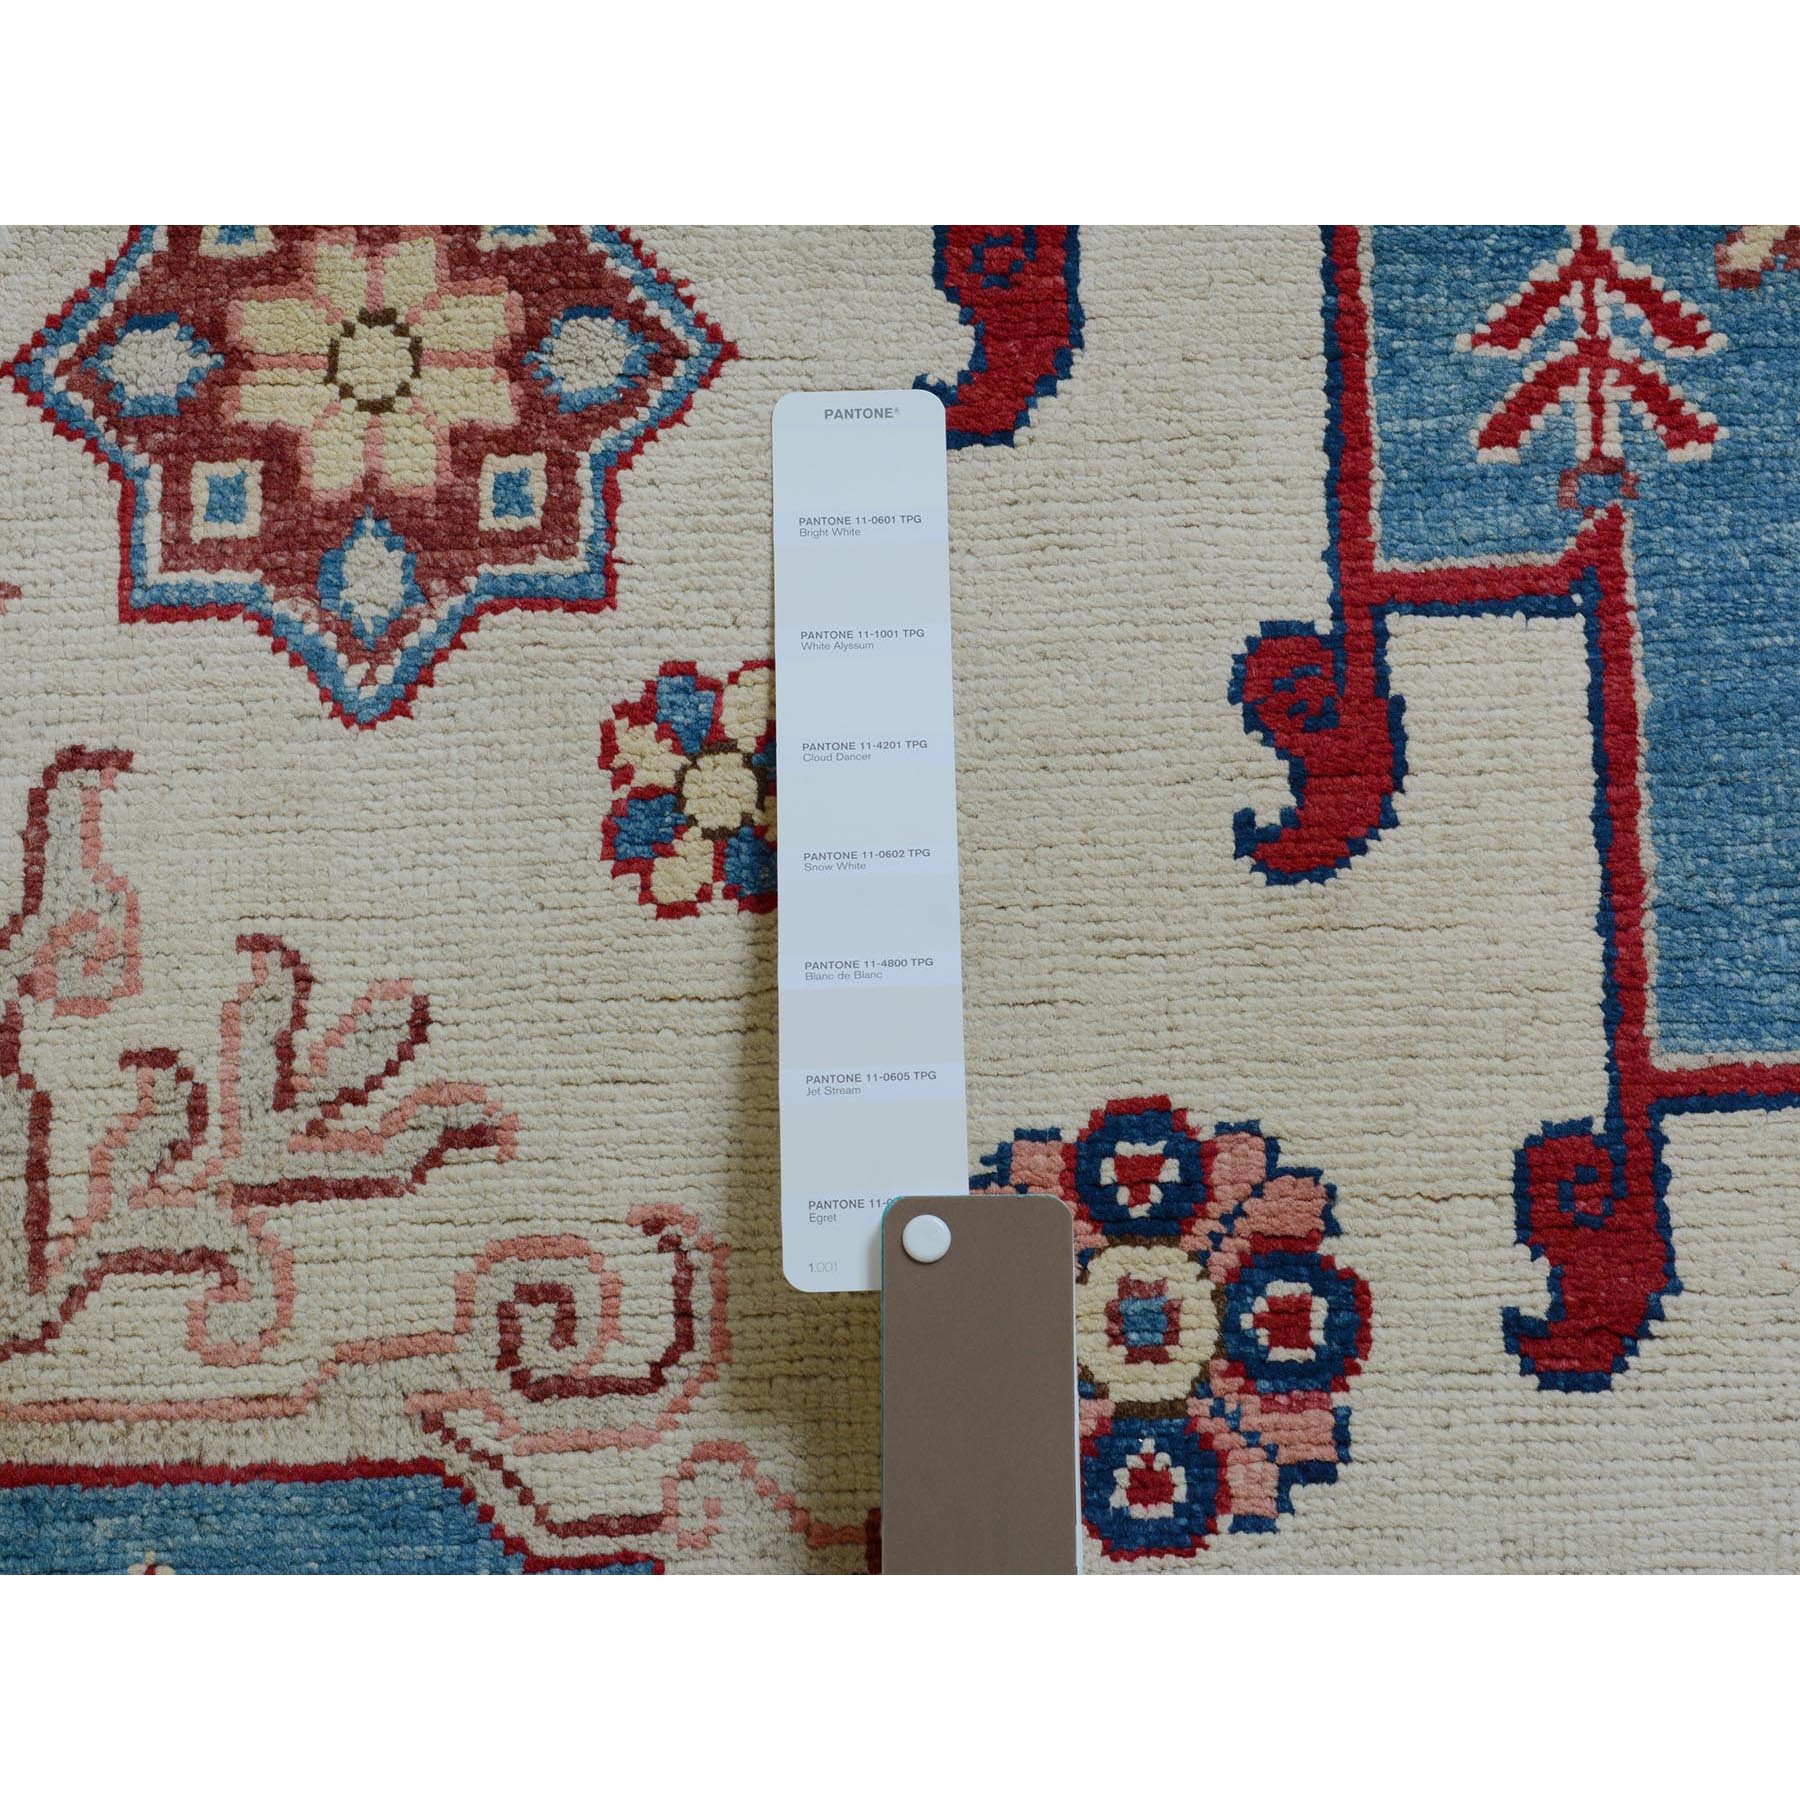 10-x13-4  Ivory Special kazak Heriz Design Pure Wool Hand Knotted Oriental Rug 